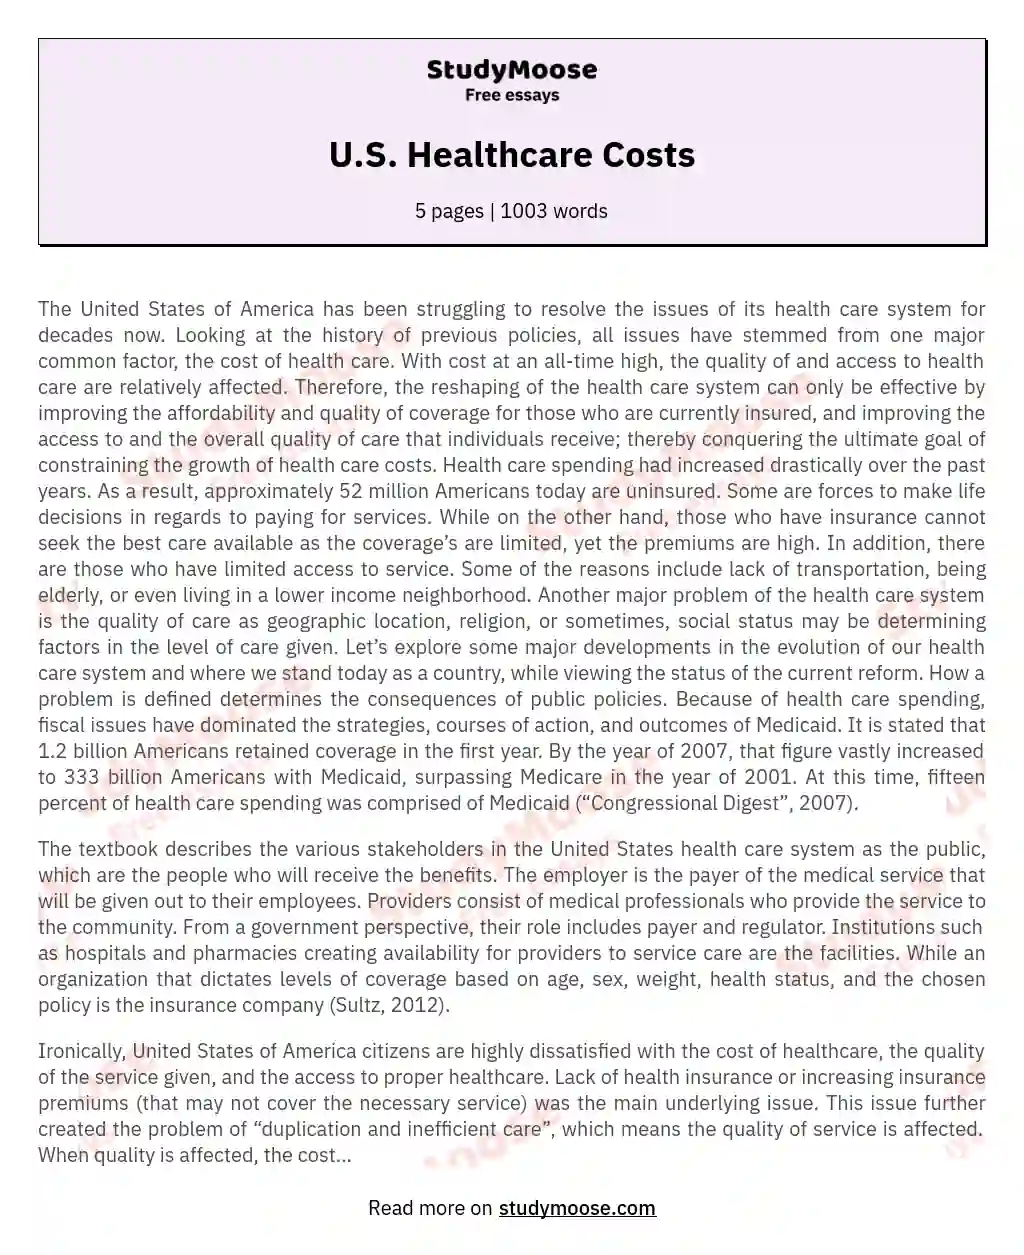 U.S. Healthcare Costs essay